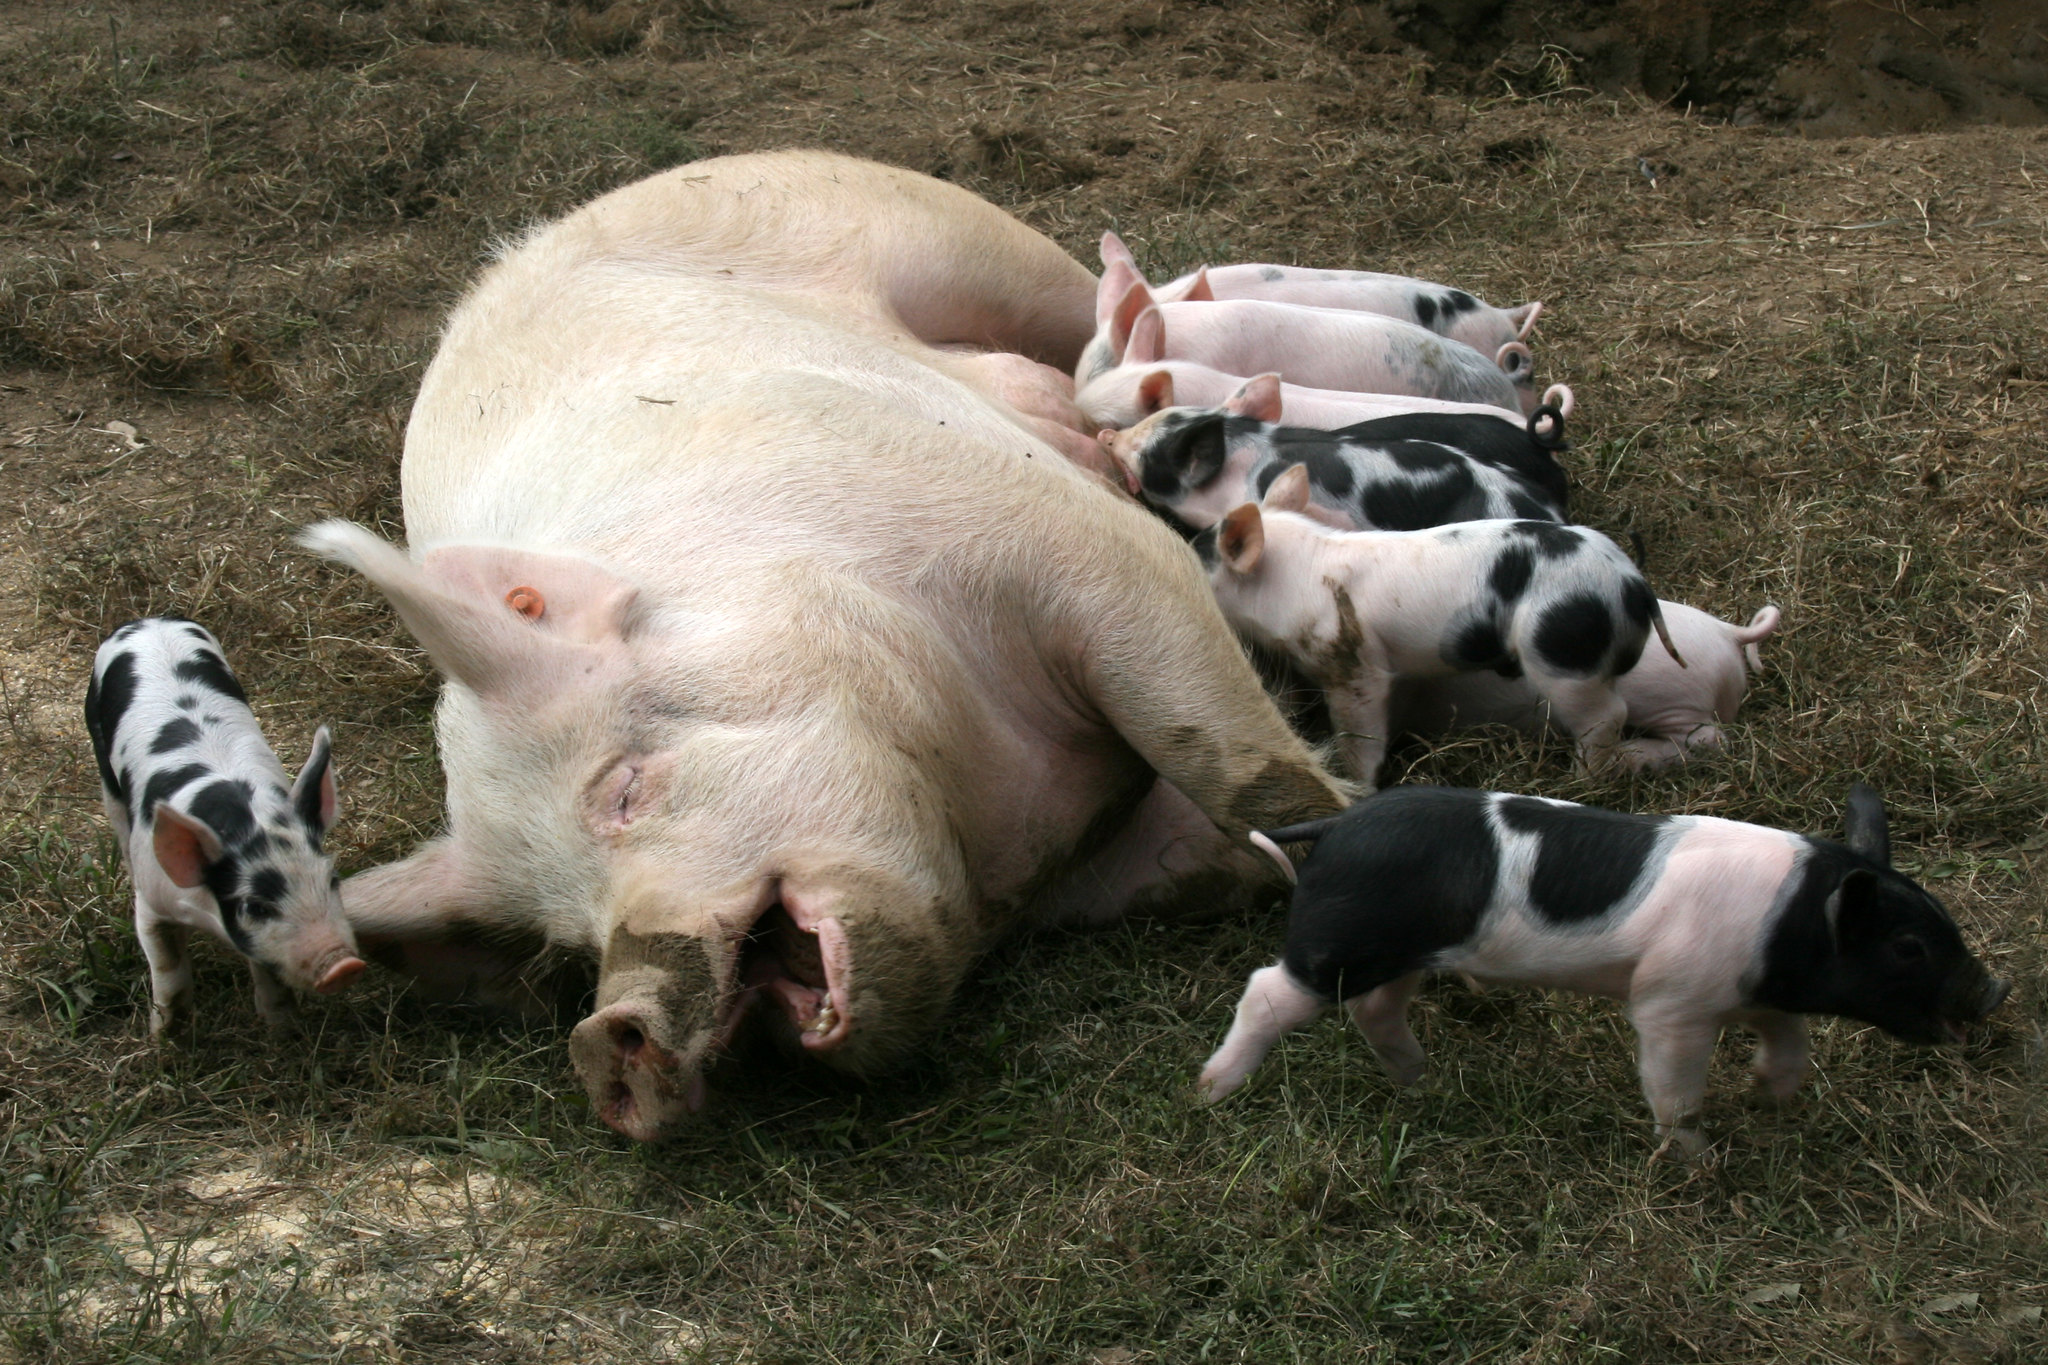 Piglets nursing their mother